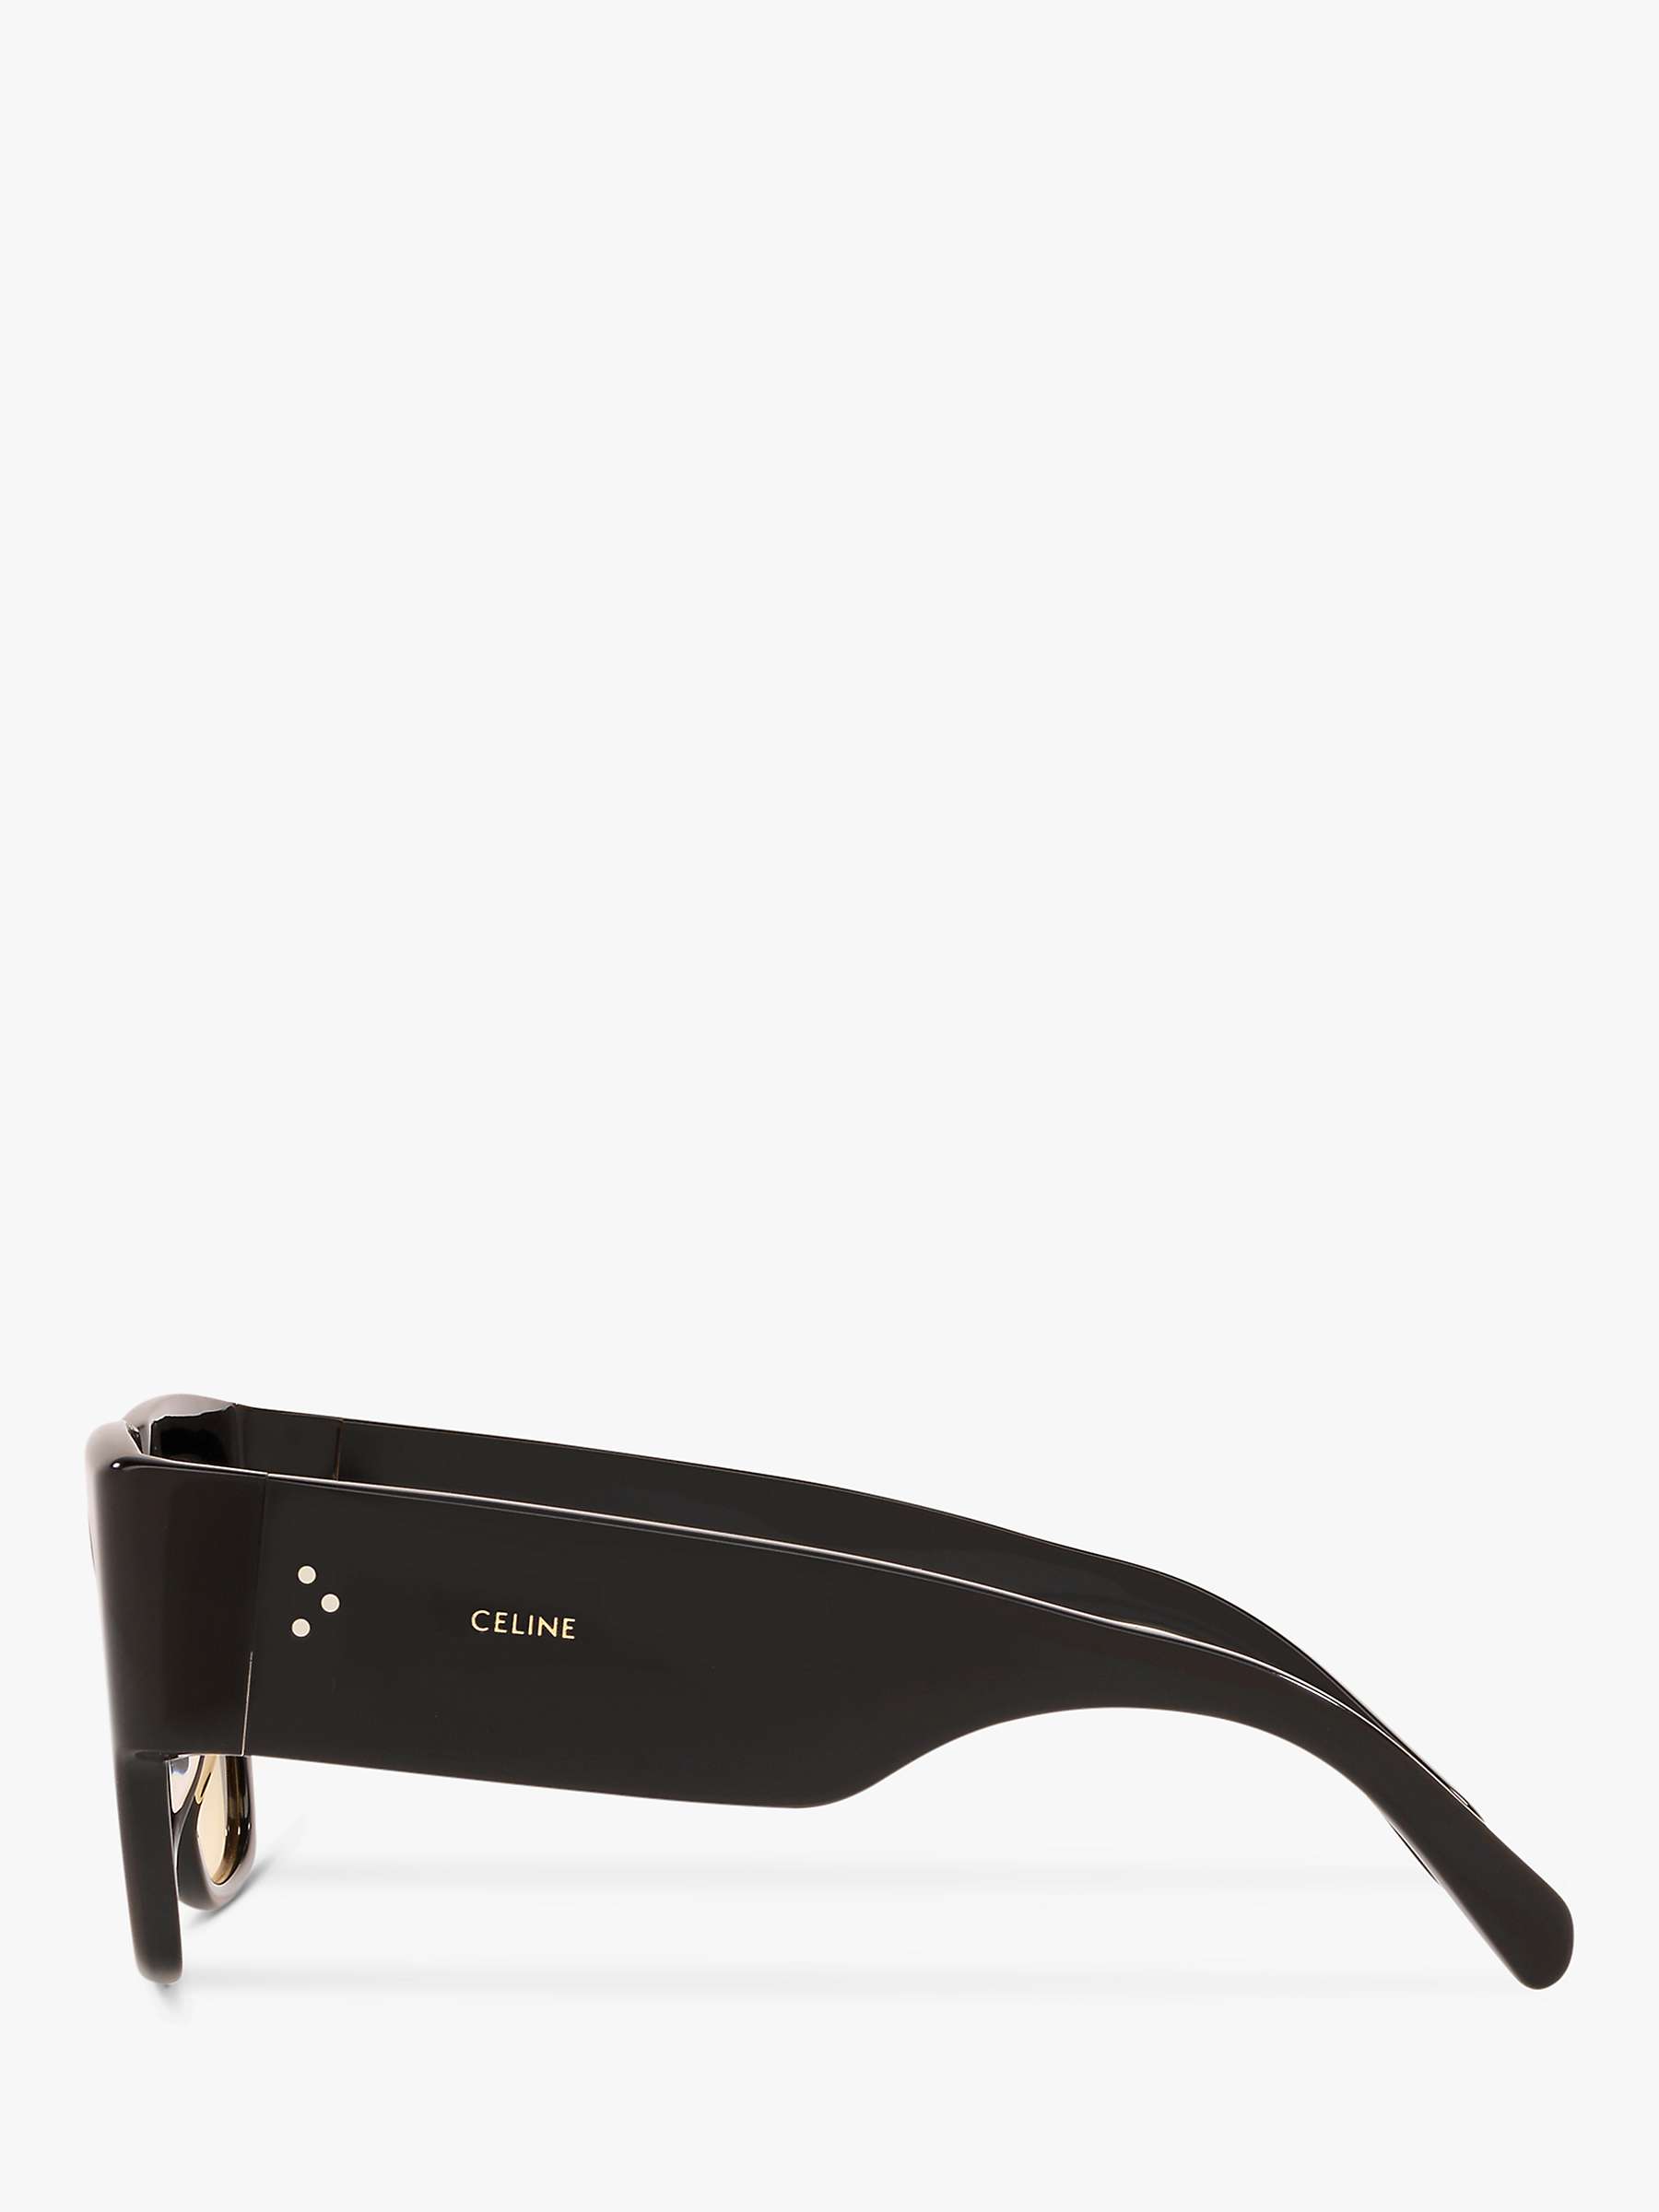 Celine CL4056IN Women's Rectangular Sunglasses, Black/Beige Gradient at ...